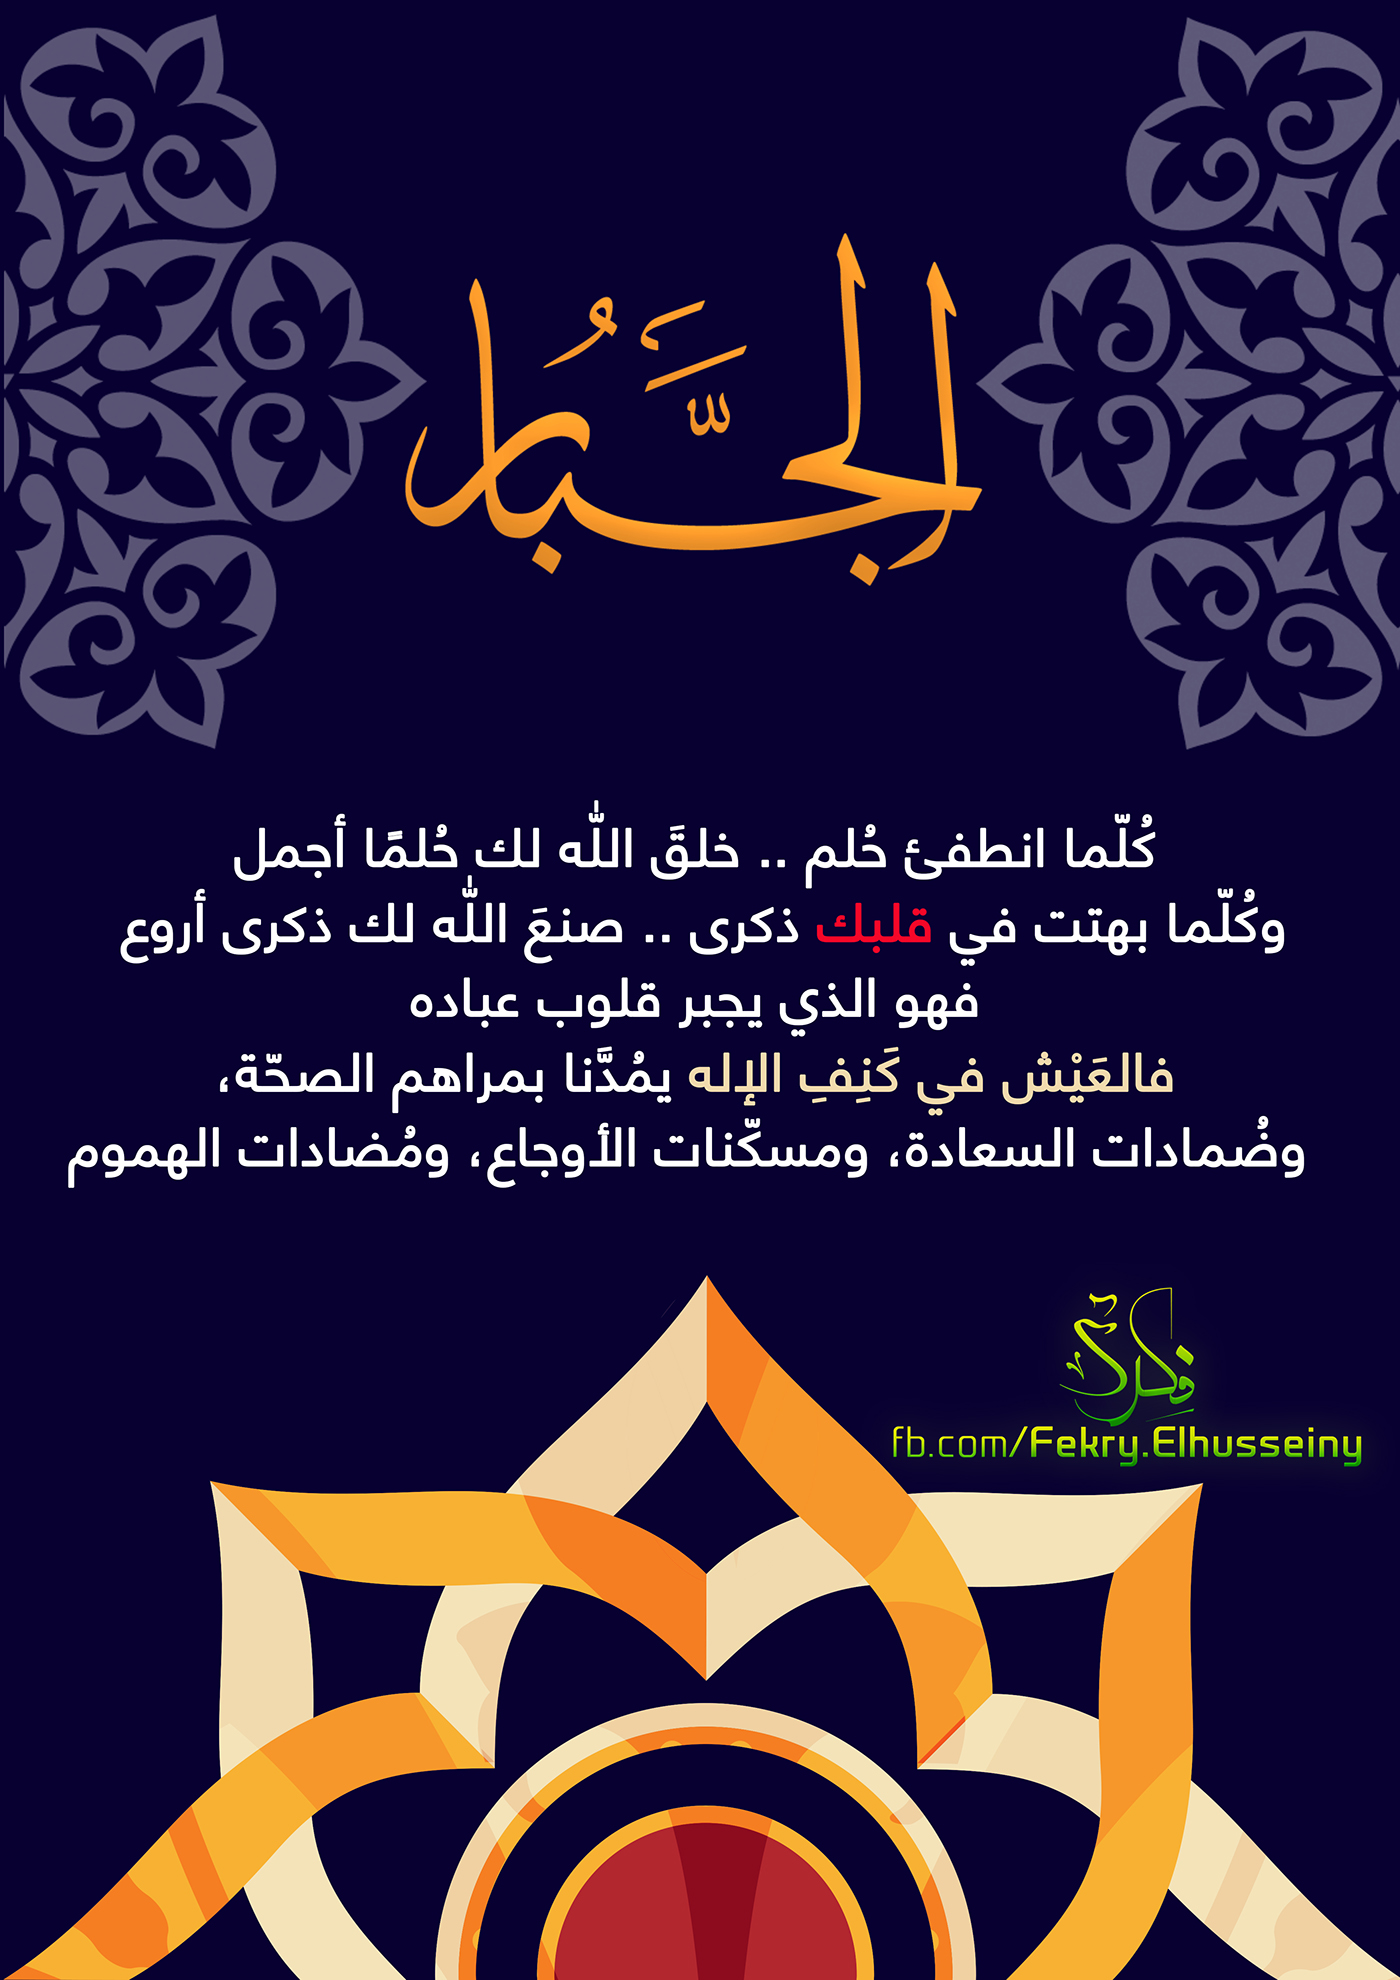 islamic graphic design  Event facebook qoute أسماء الله الحسنى إسلامي لأنك الله